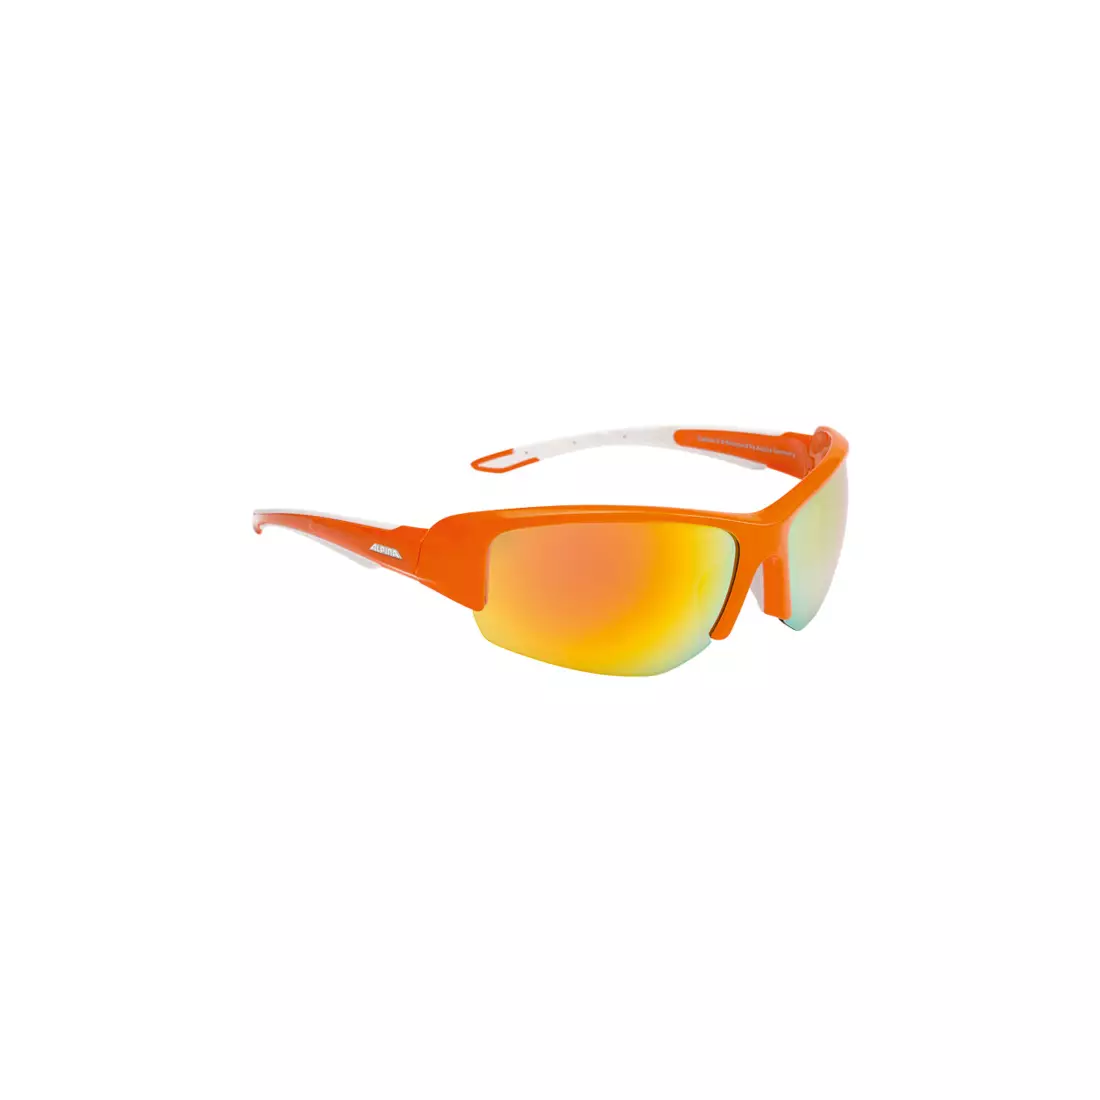 Ochelari sport ALPINA - CALLUM 2.0 - sticla ceramica oglinda portocaliu-alb / portocaliu.